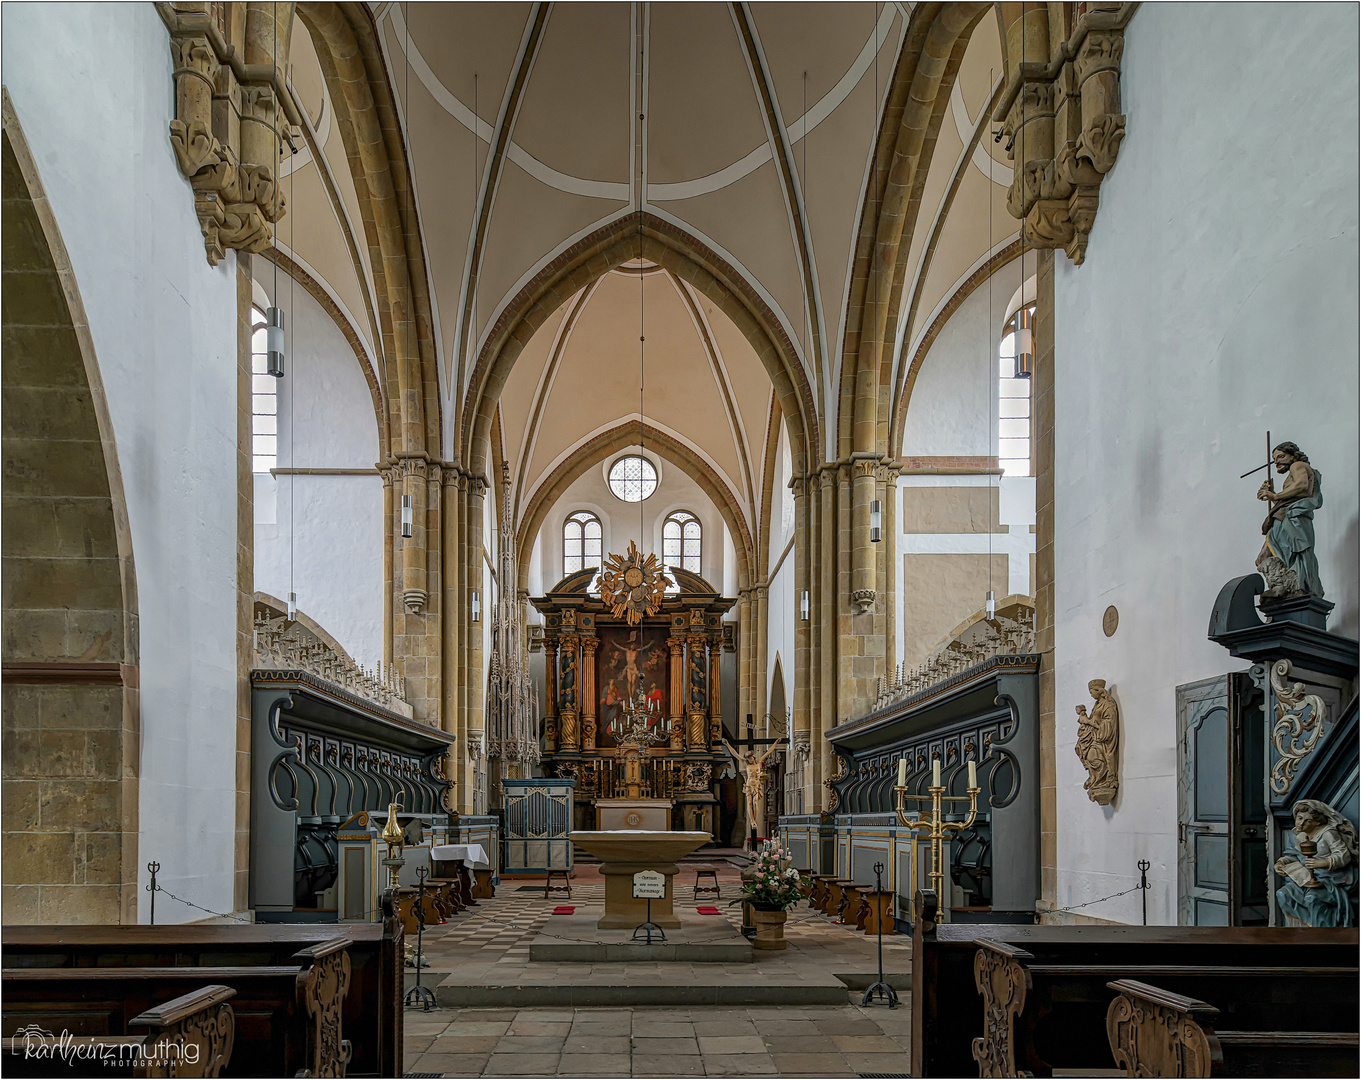 *** Impressionen aus dem Kloster Marienfeld in Harsewinkel-Marienfeld ***